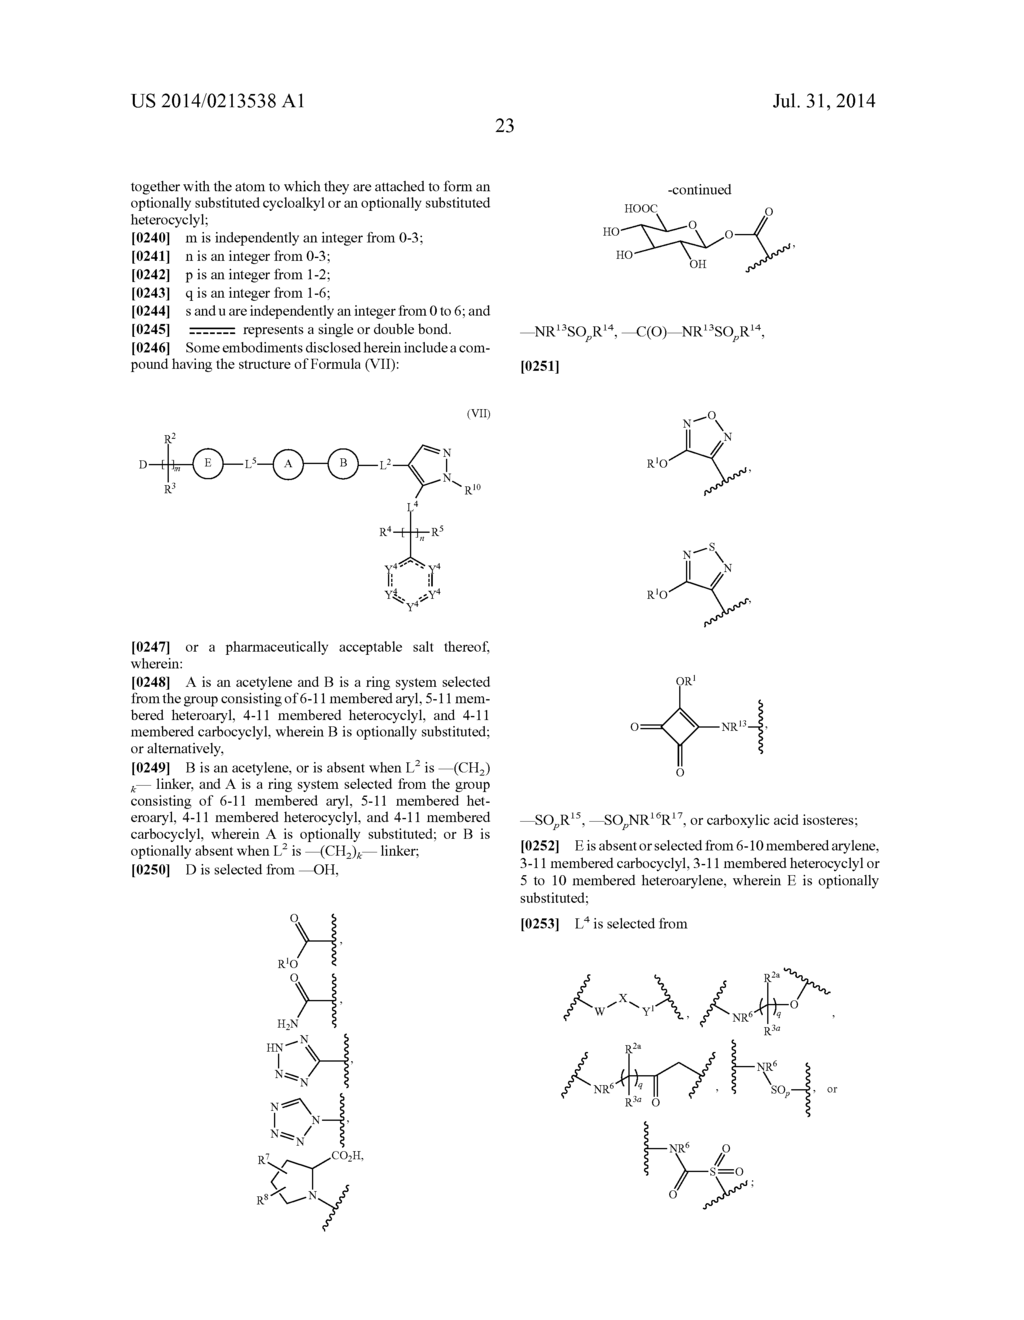 LYSOPHOSPHATIDIC ACID RECEPTOR ANTAGONISTS - diagram, schematic, and image 24